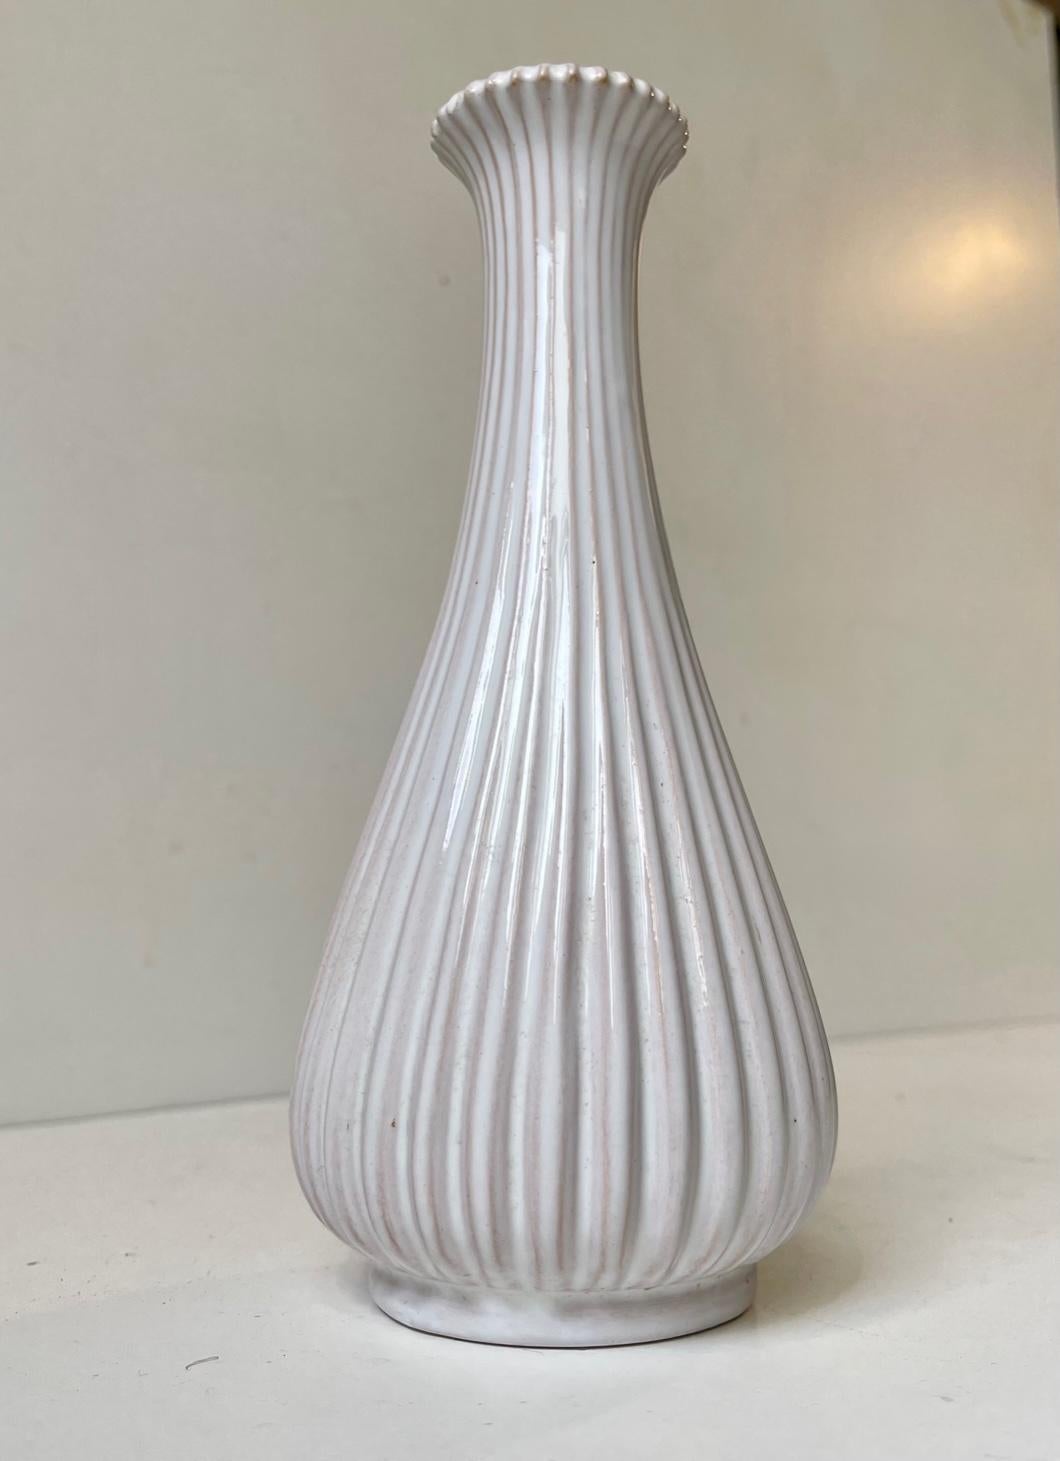 Danish Fluted Ceramic Vase in White Glaze from Eslau, 1950s